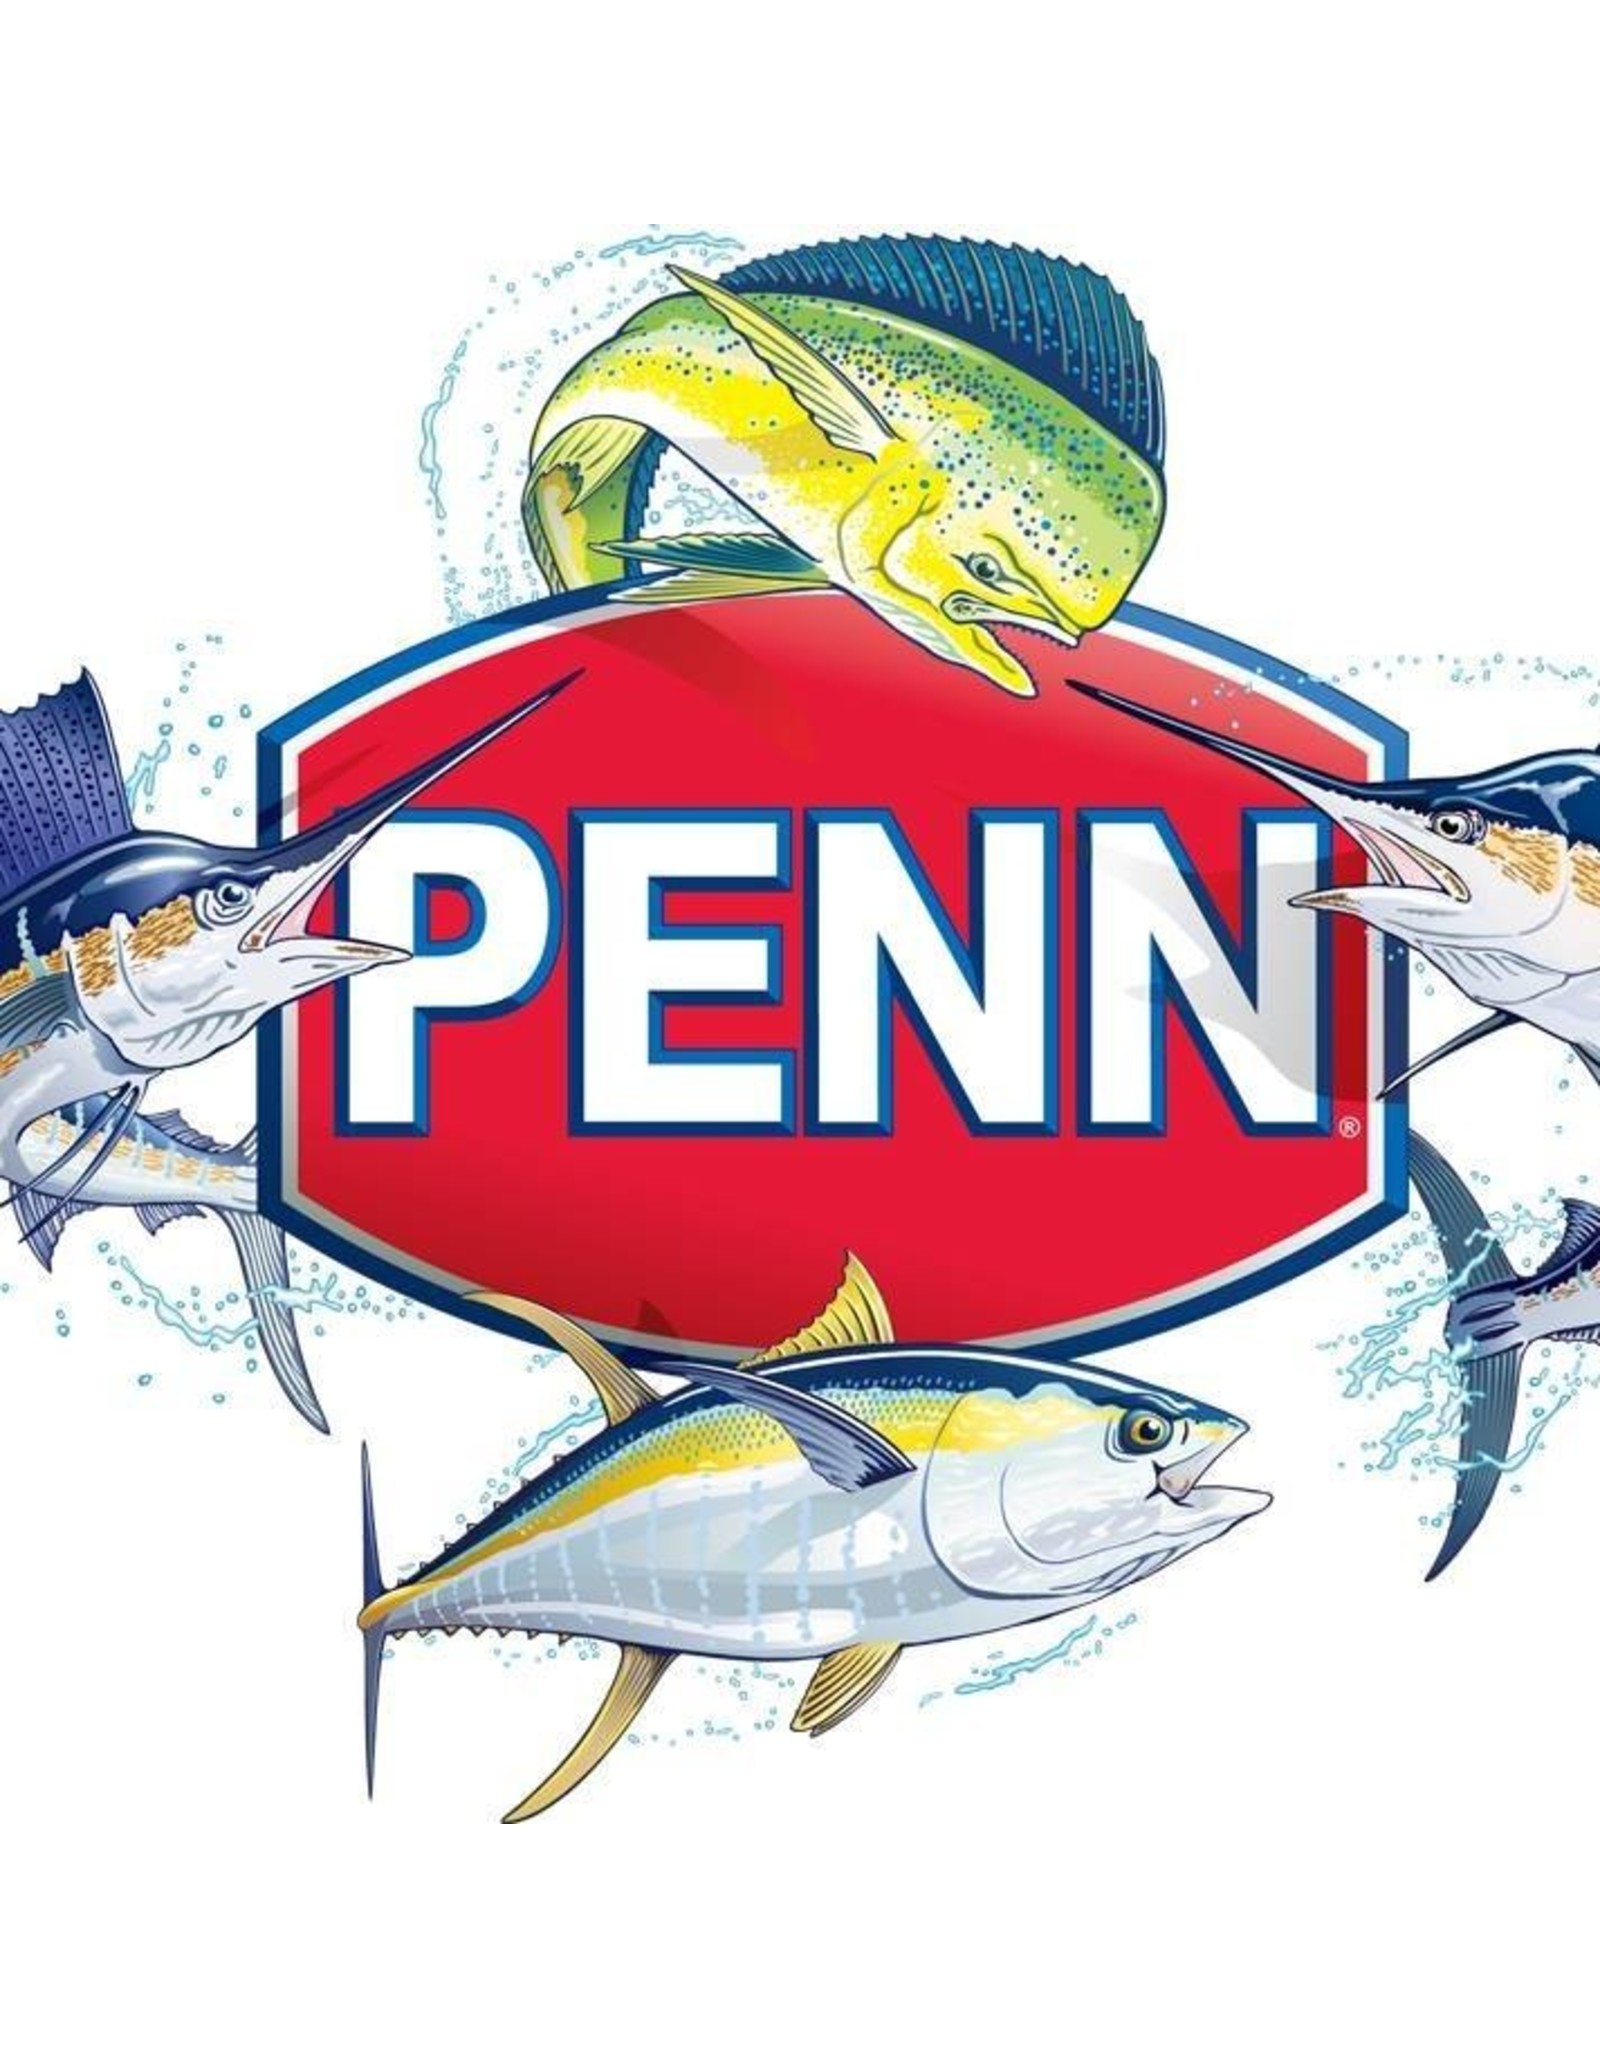 Penn 10-114  STAR DRAG